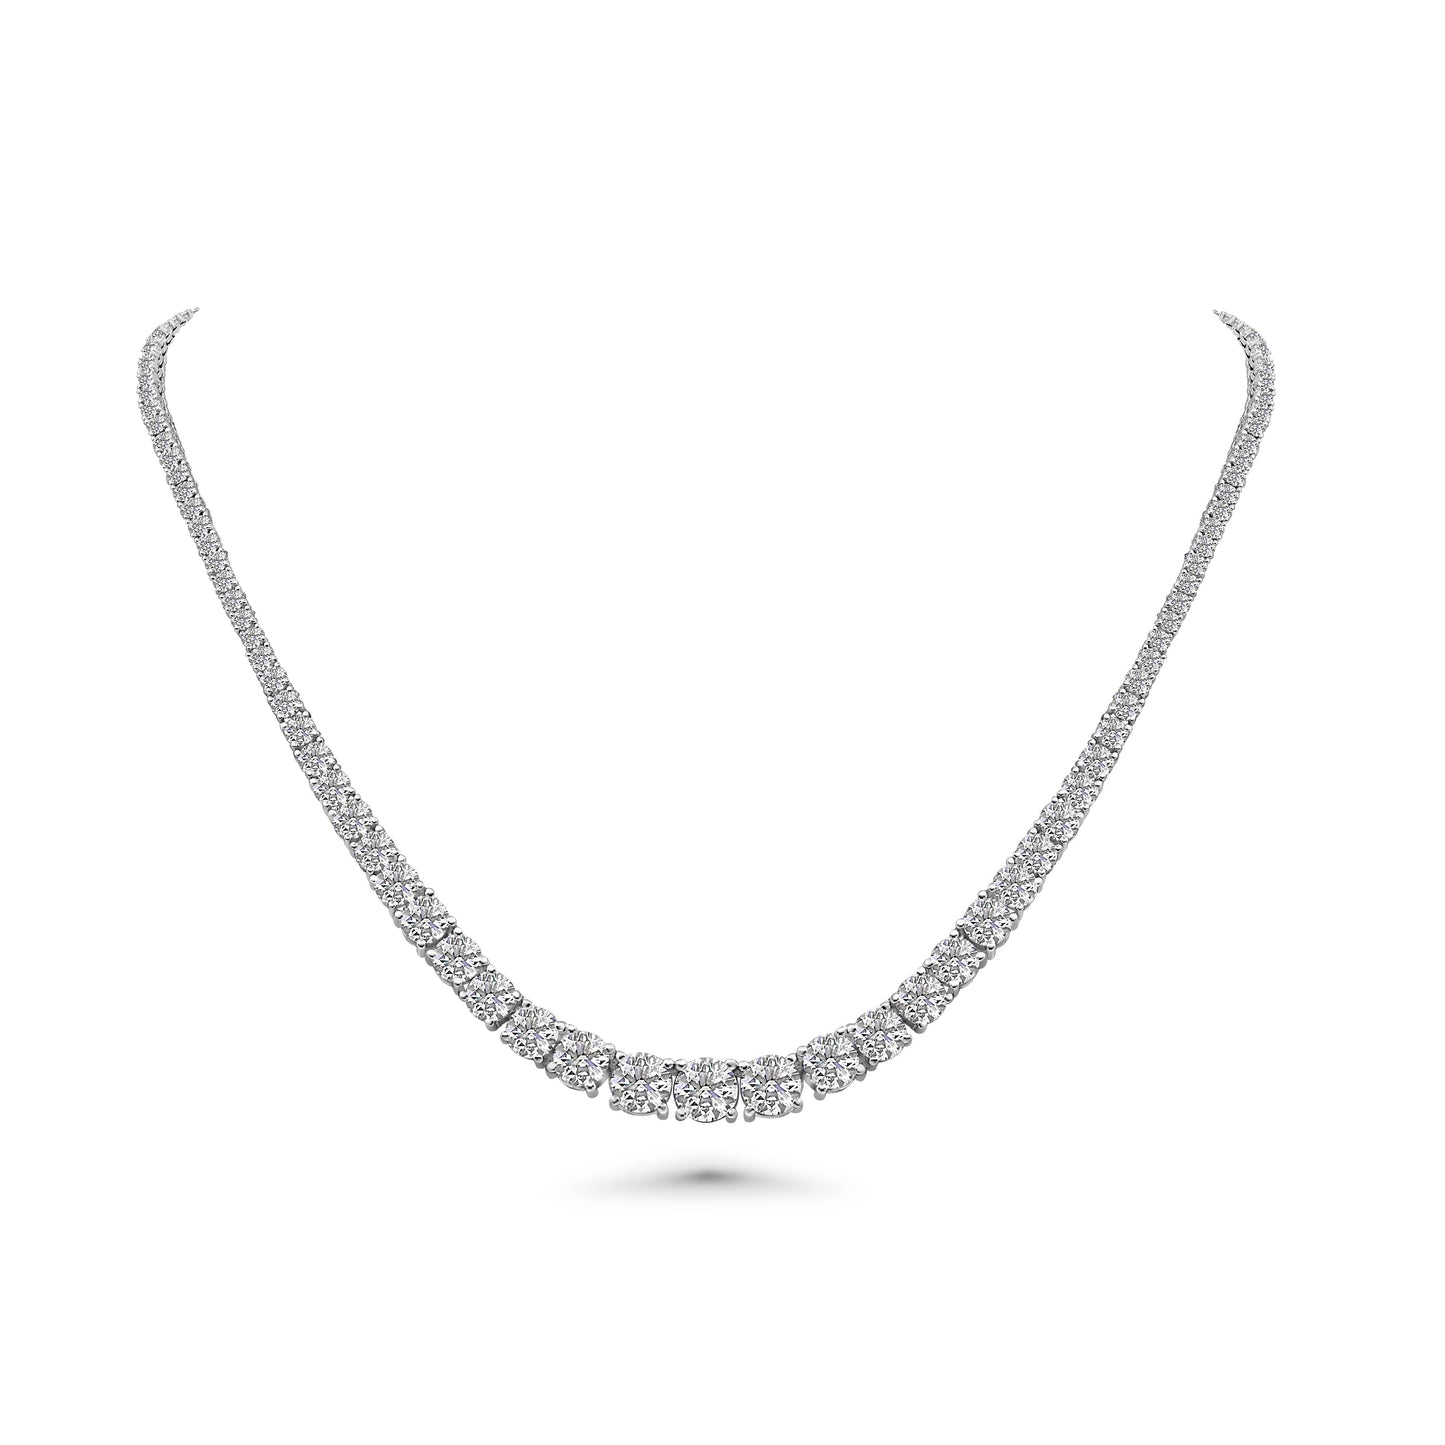 17.09 Carats Riviere Diamond Tennis Necklace